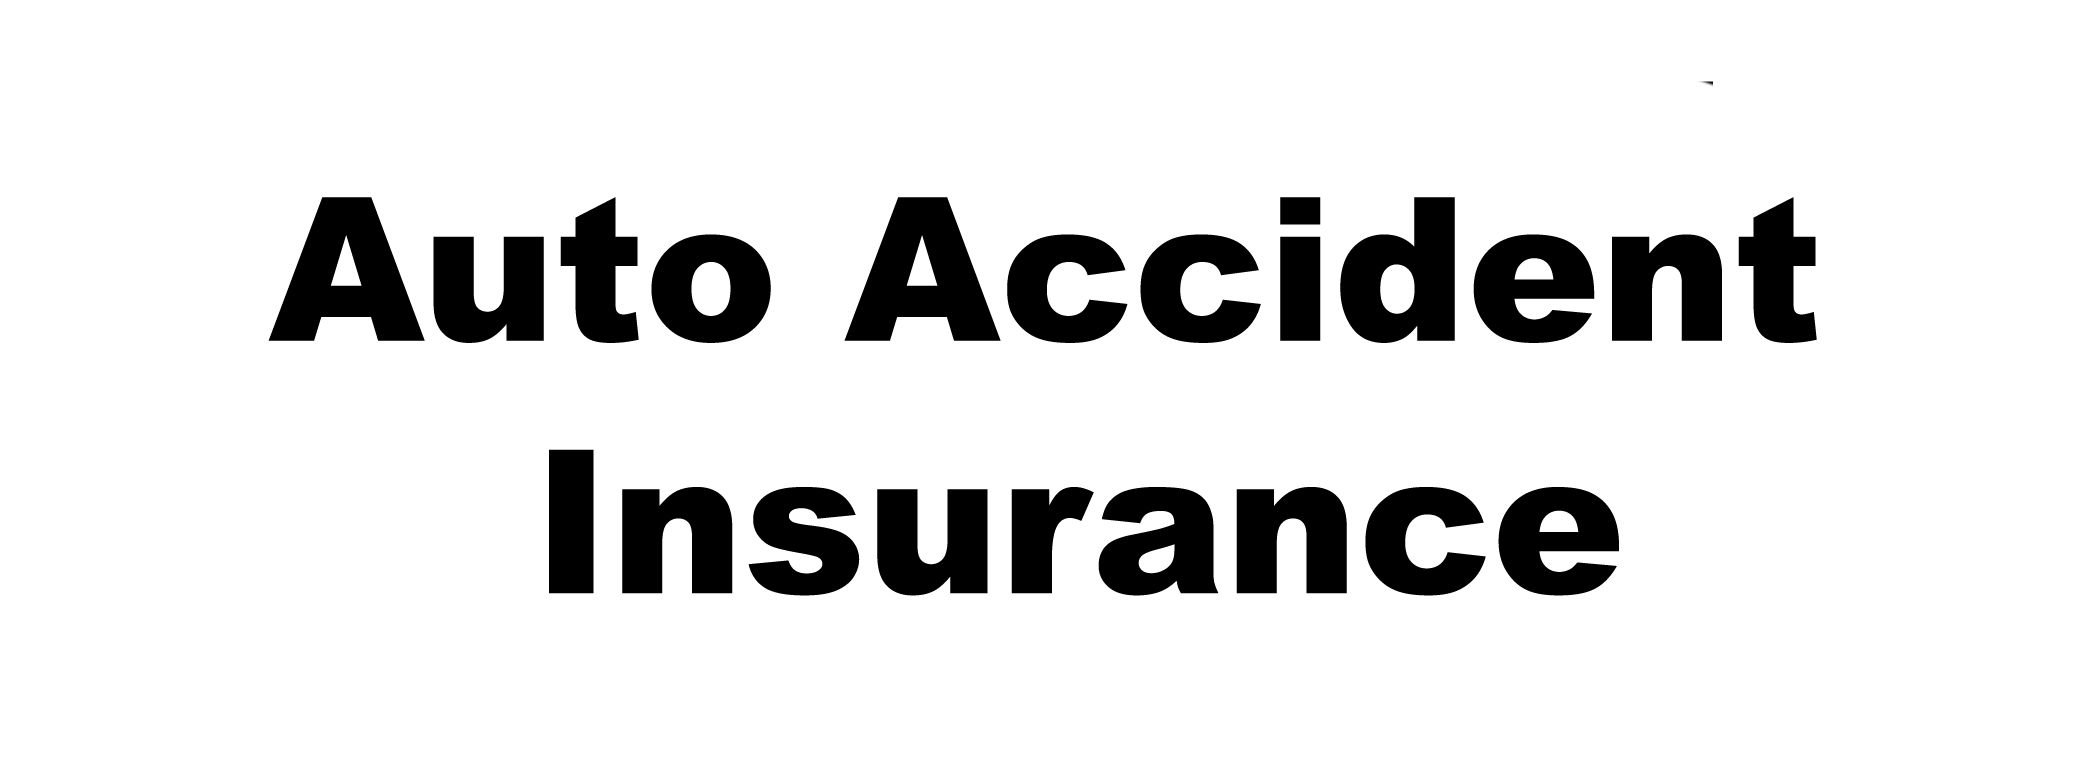 Auto Accident Insurance